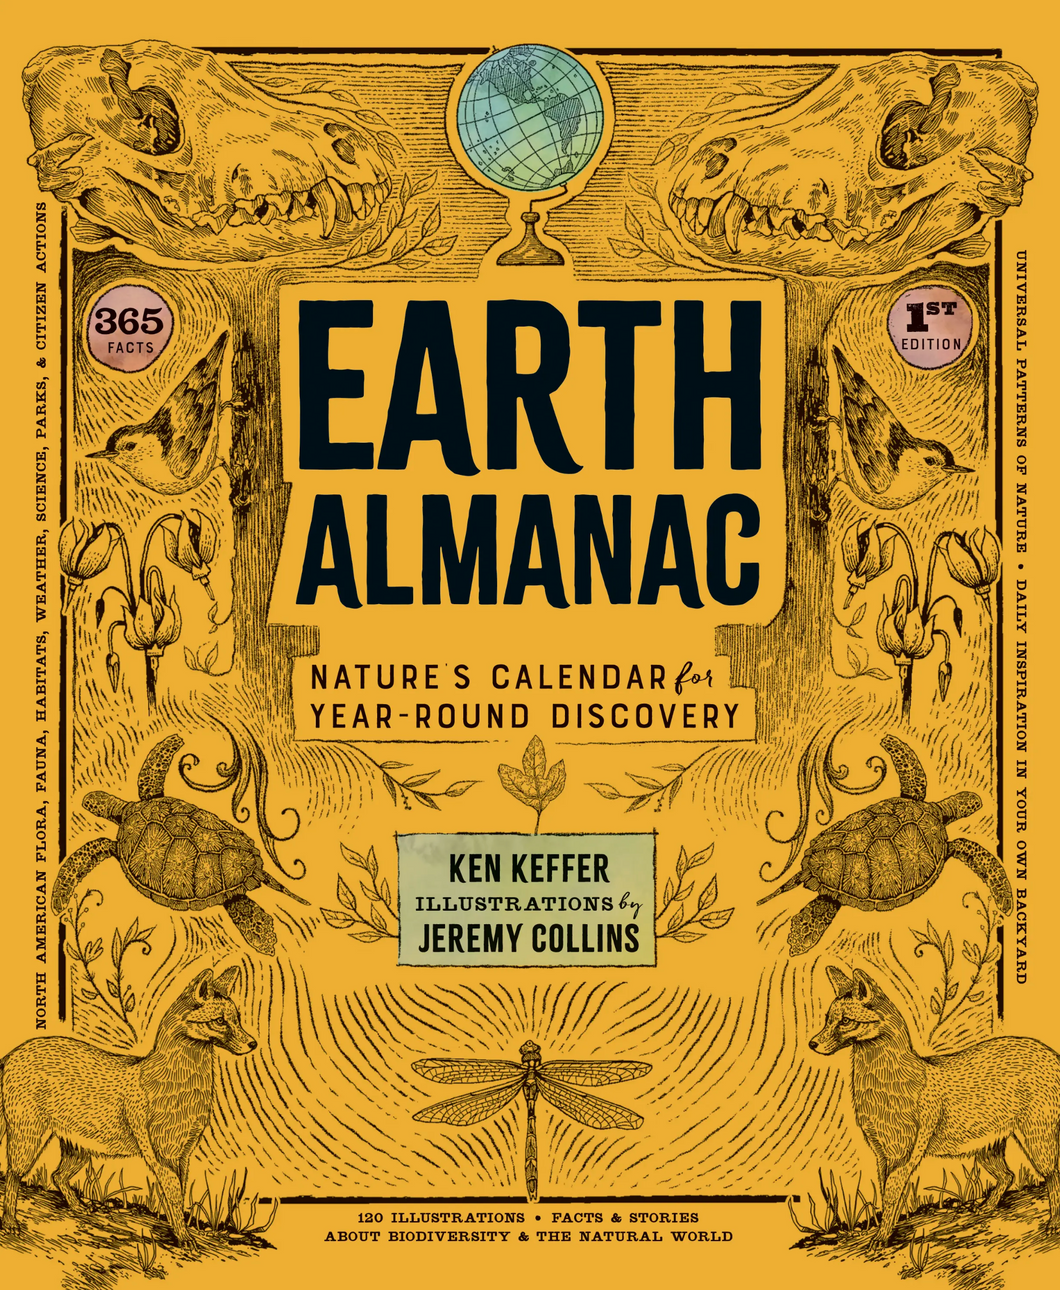 Earth Almanac Book